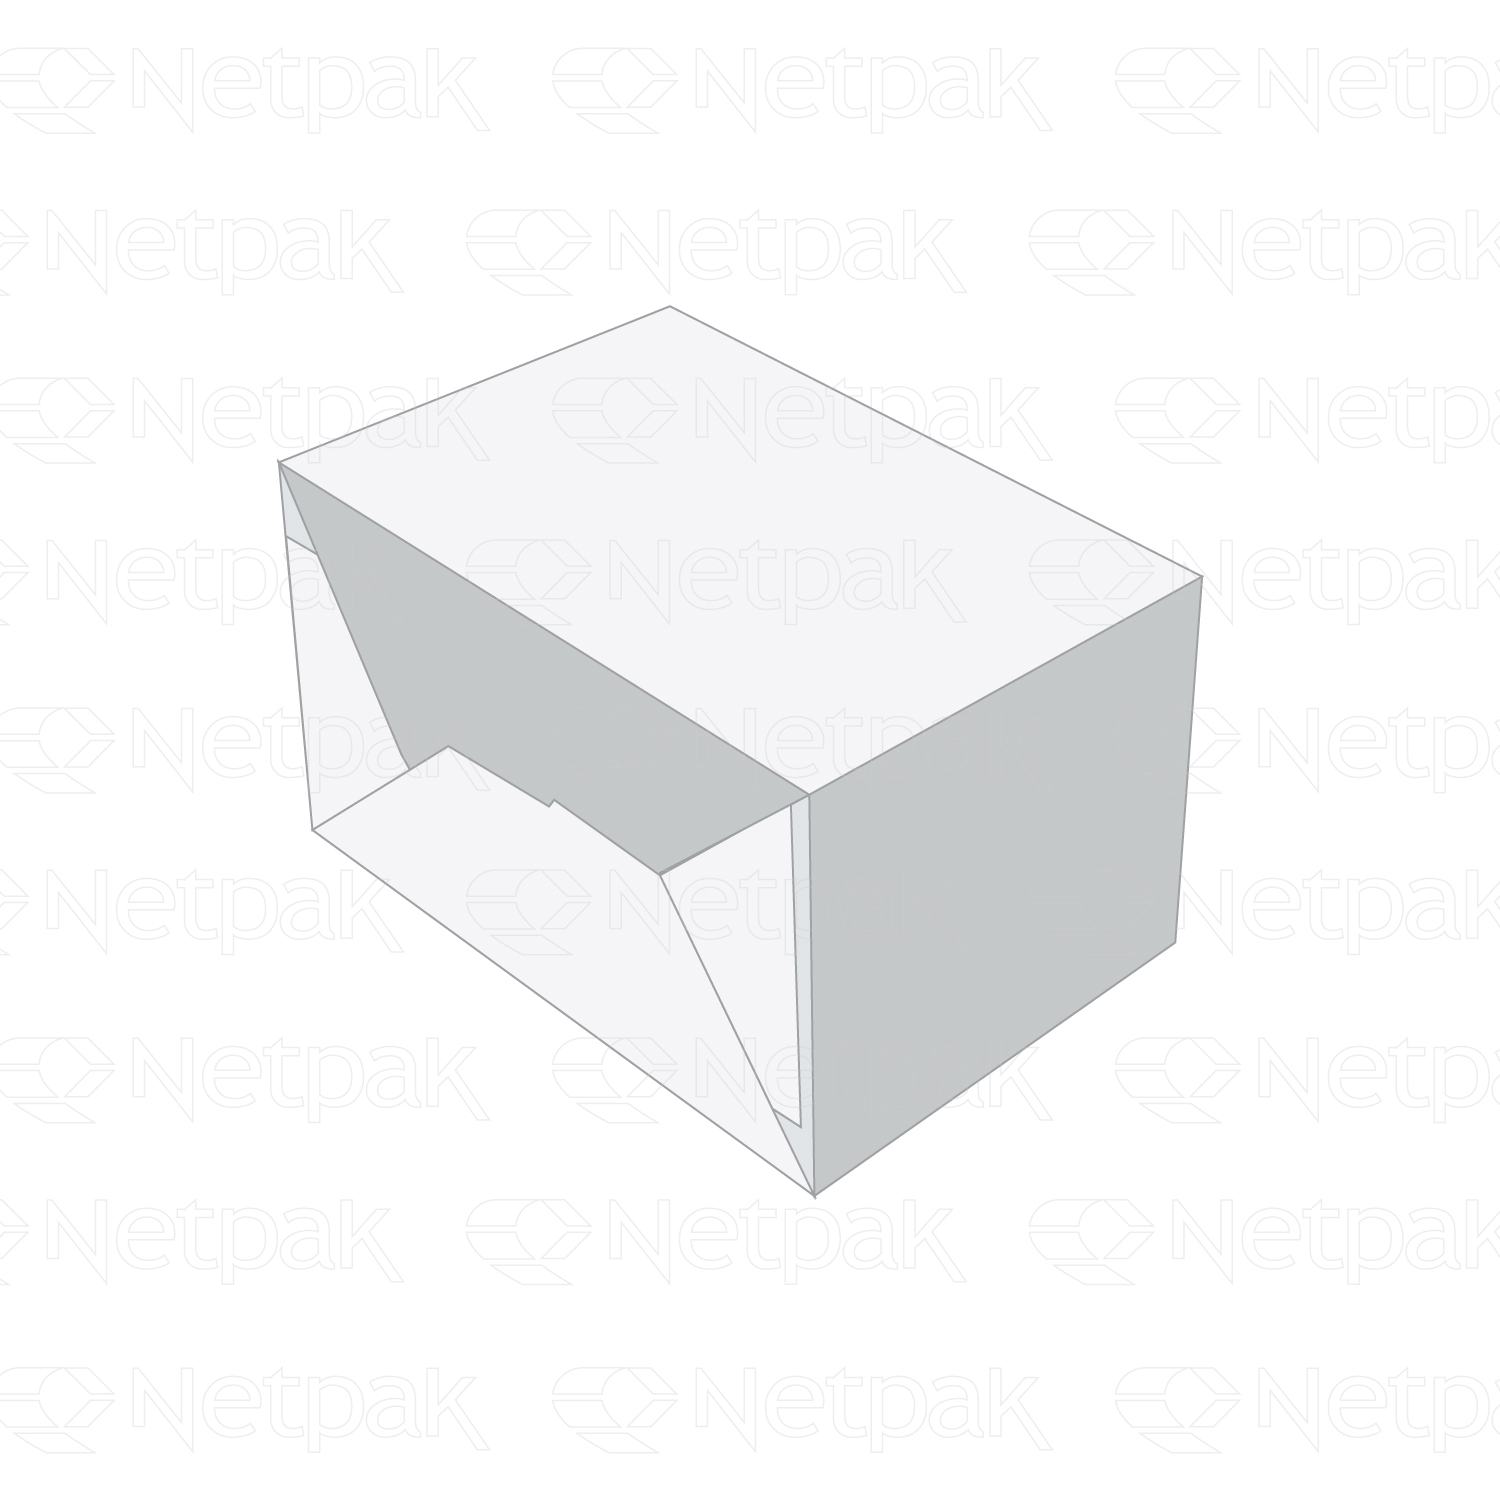 Box types - Netpak packaging